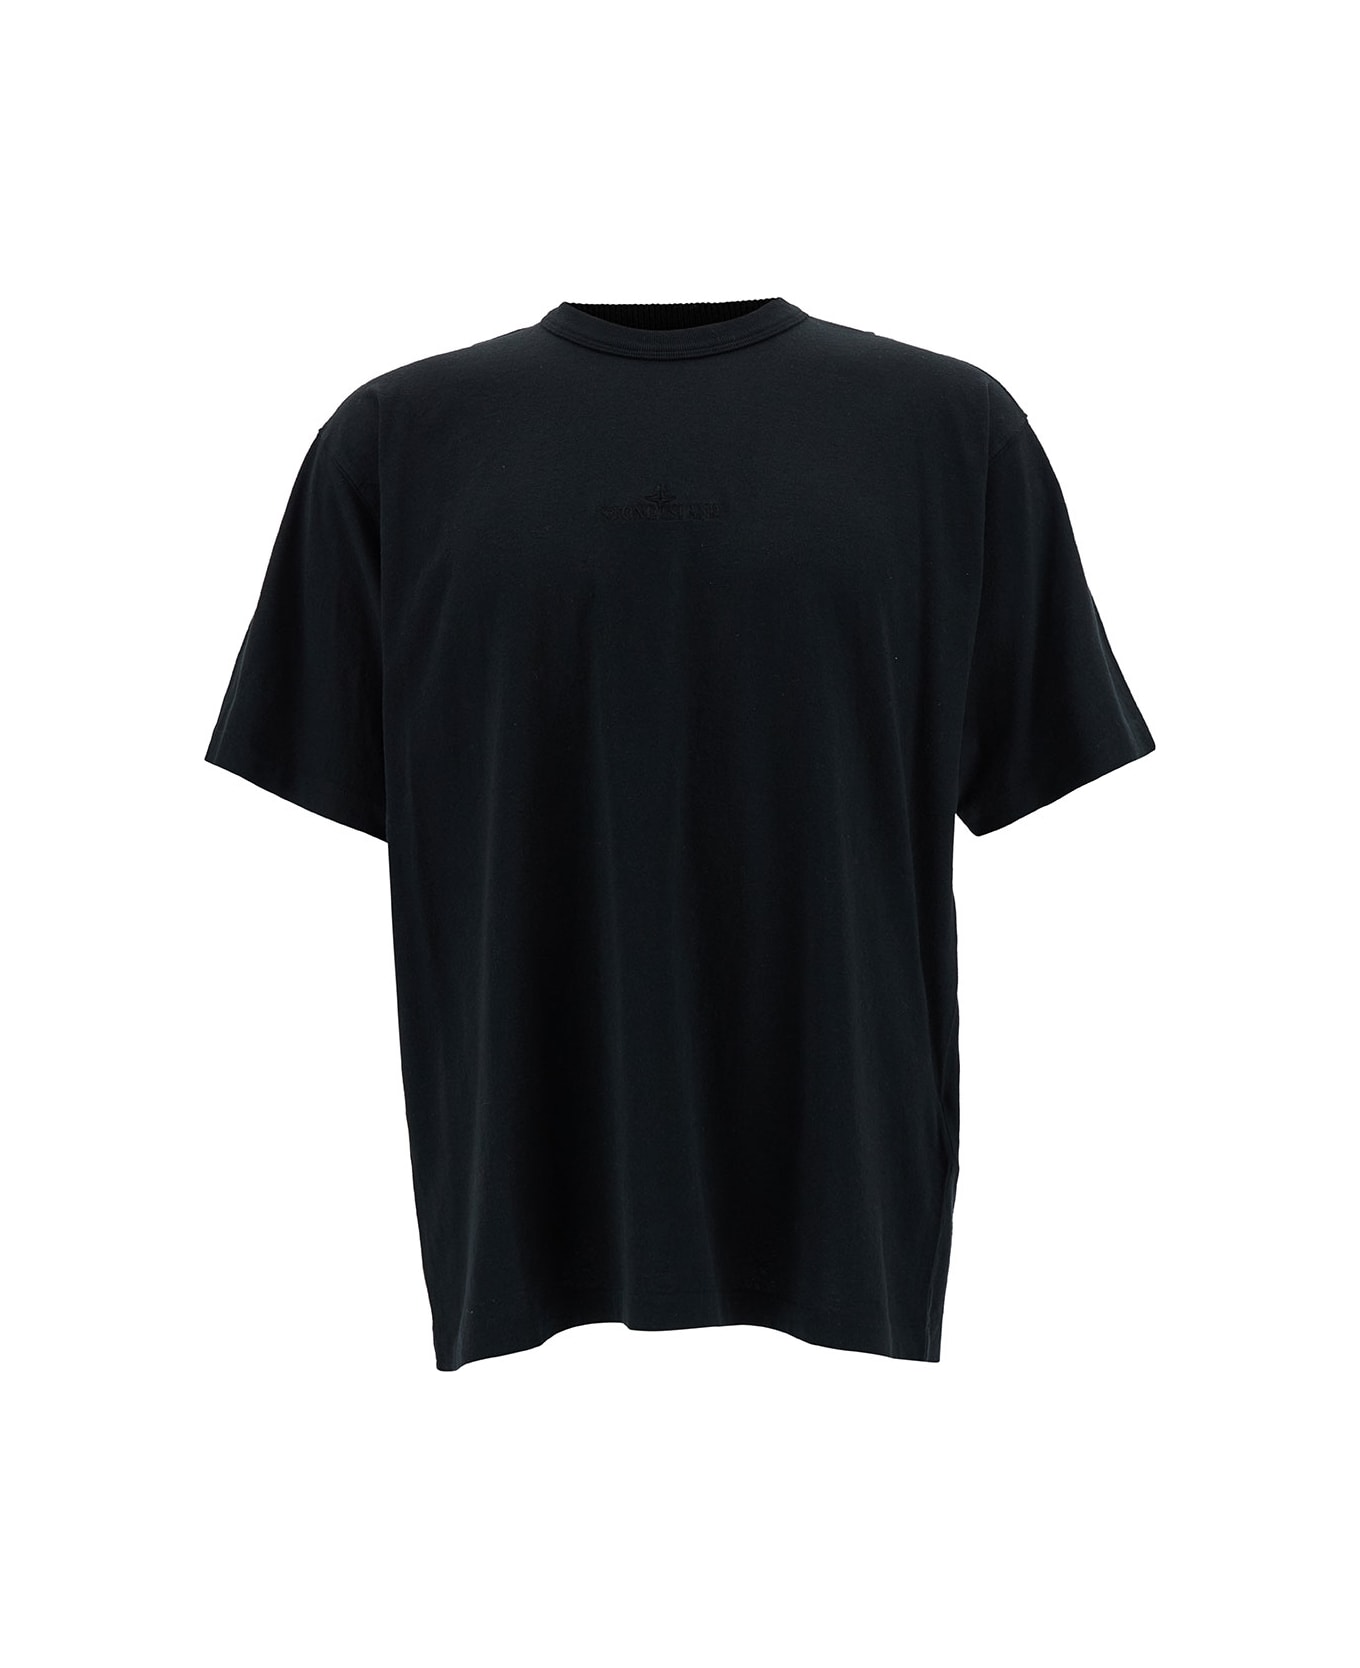 Stone Island Black Crew Neck T-shirt In Cotton Man - Black シャツ